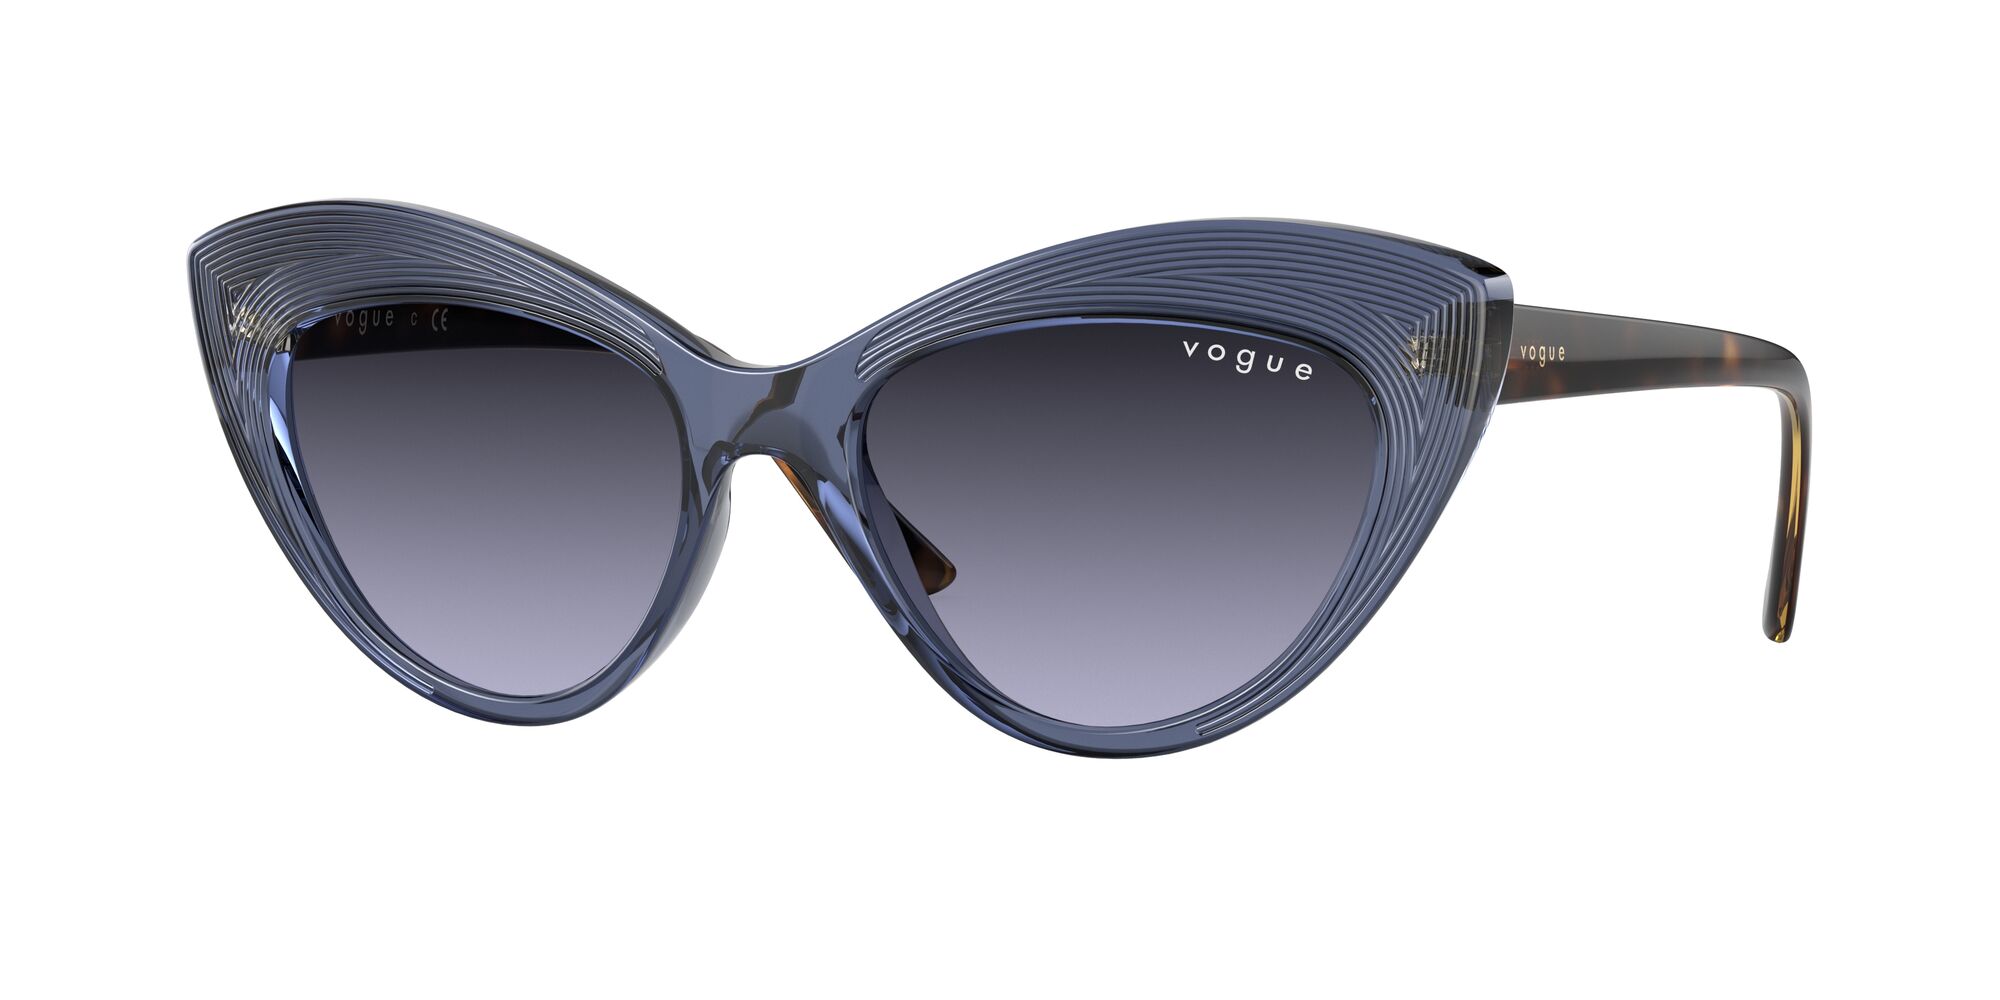 Vogue Eyewear Cateye Sunglasses